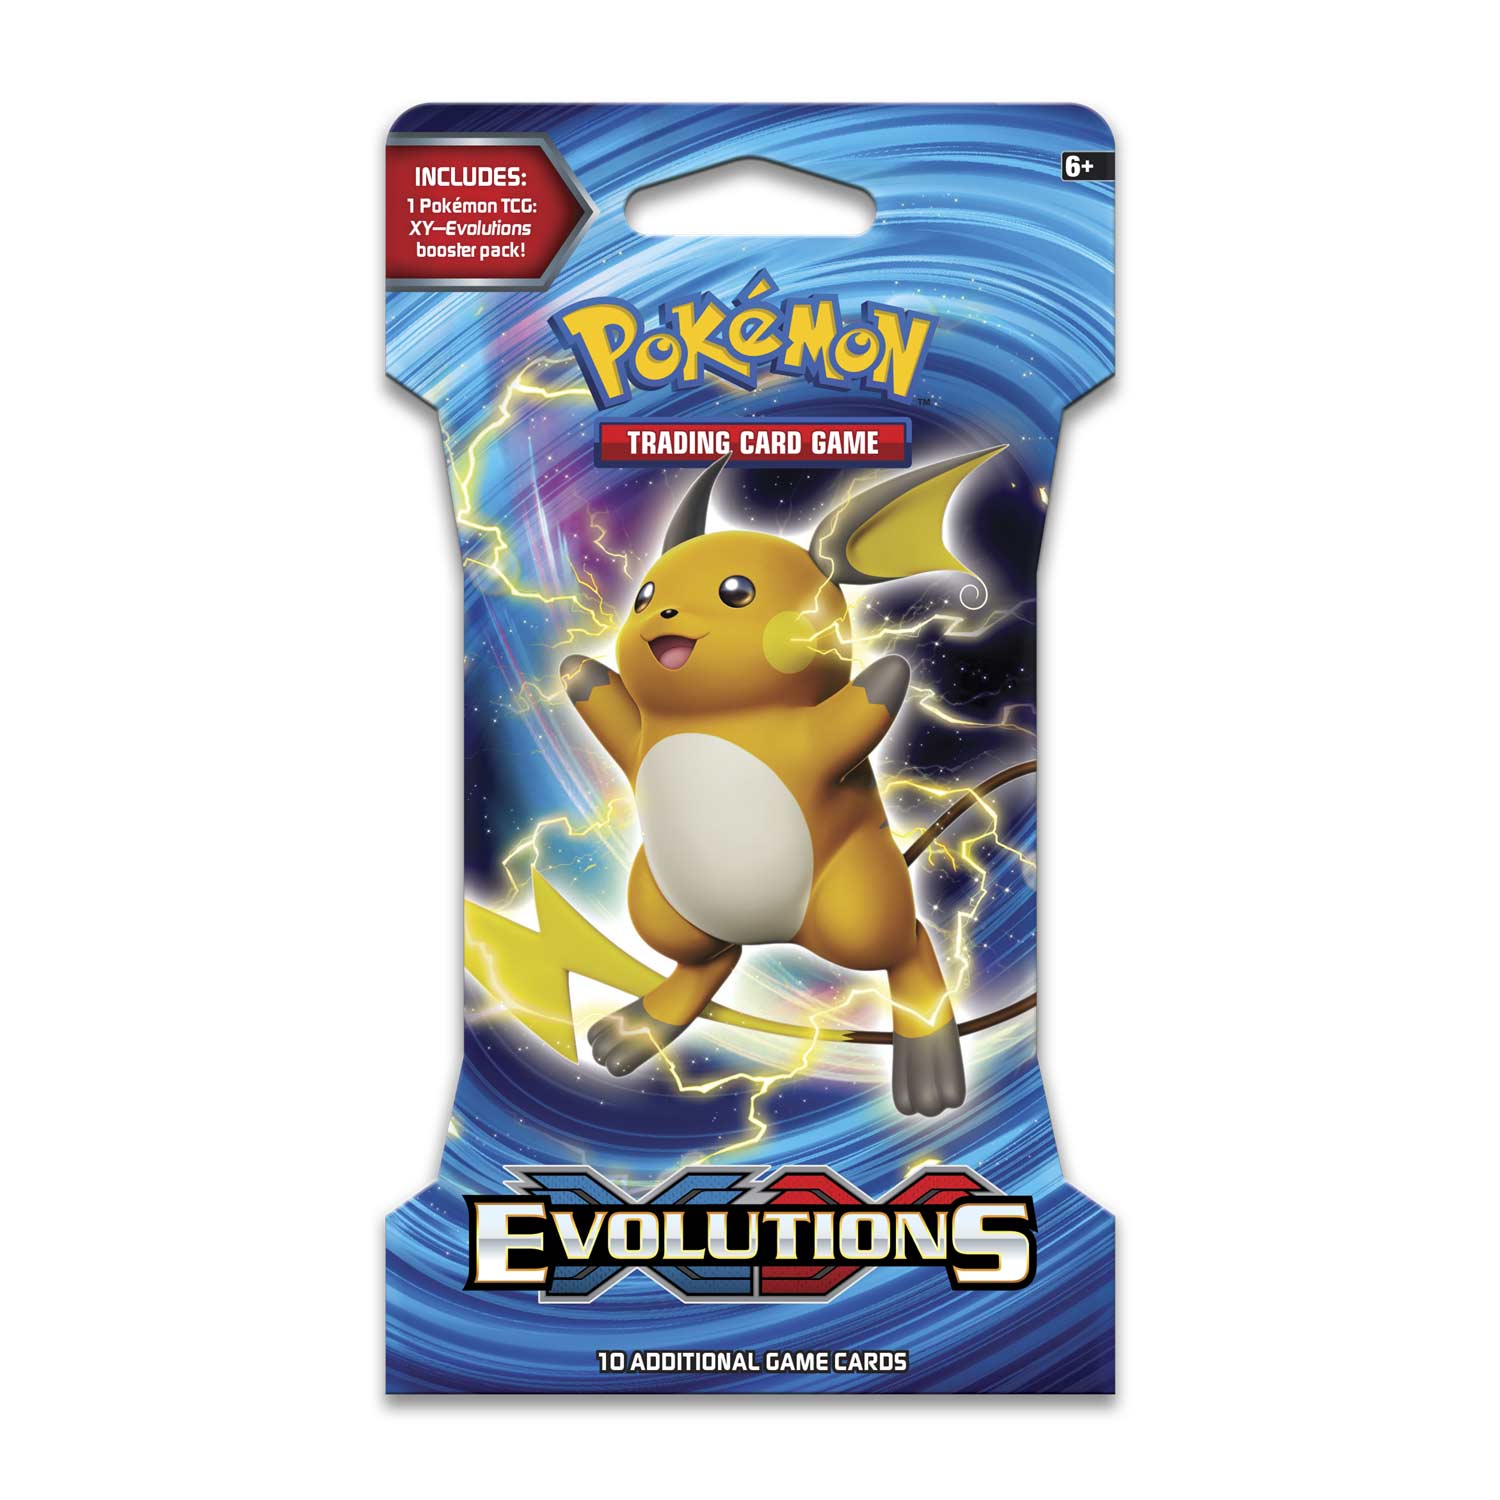 x3 Pokemon Evolutions XY Booster pack Plus 5 Card Blister 3 PACKS 